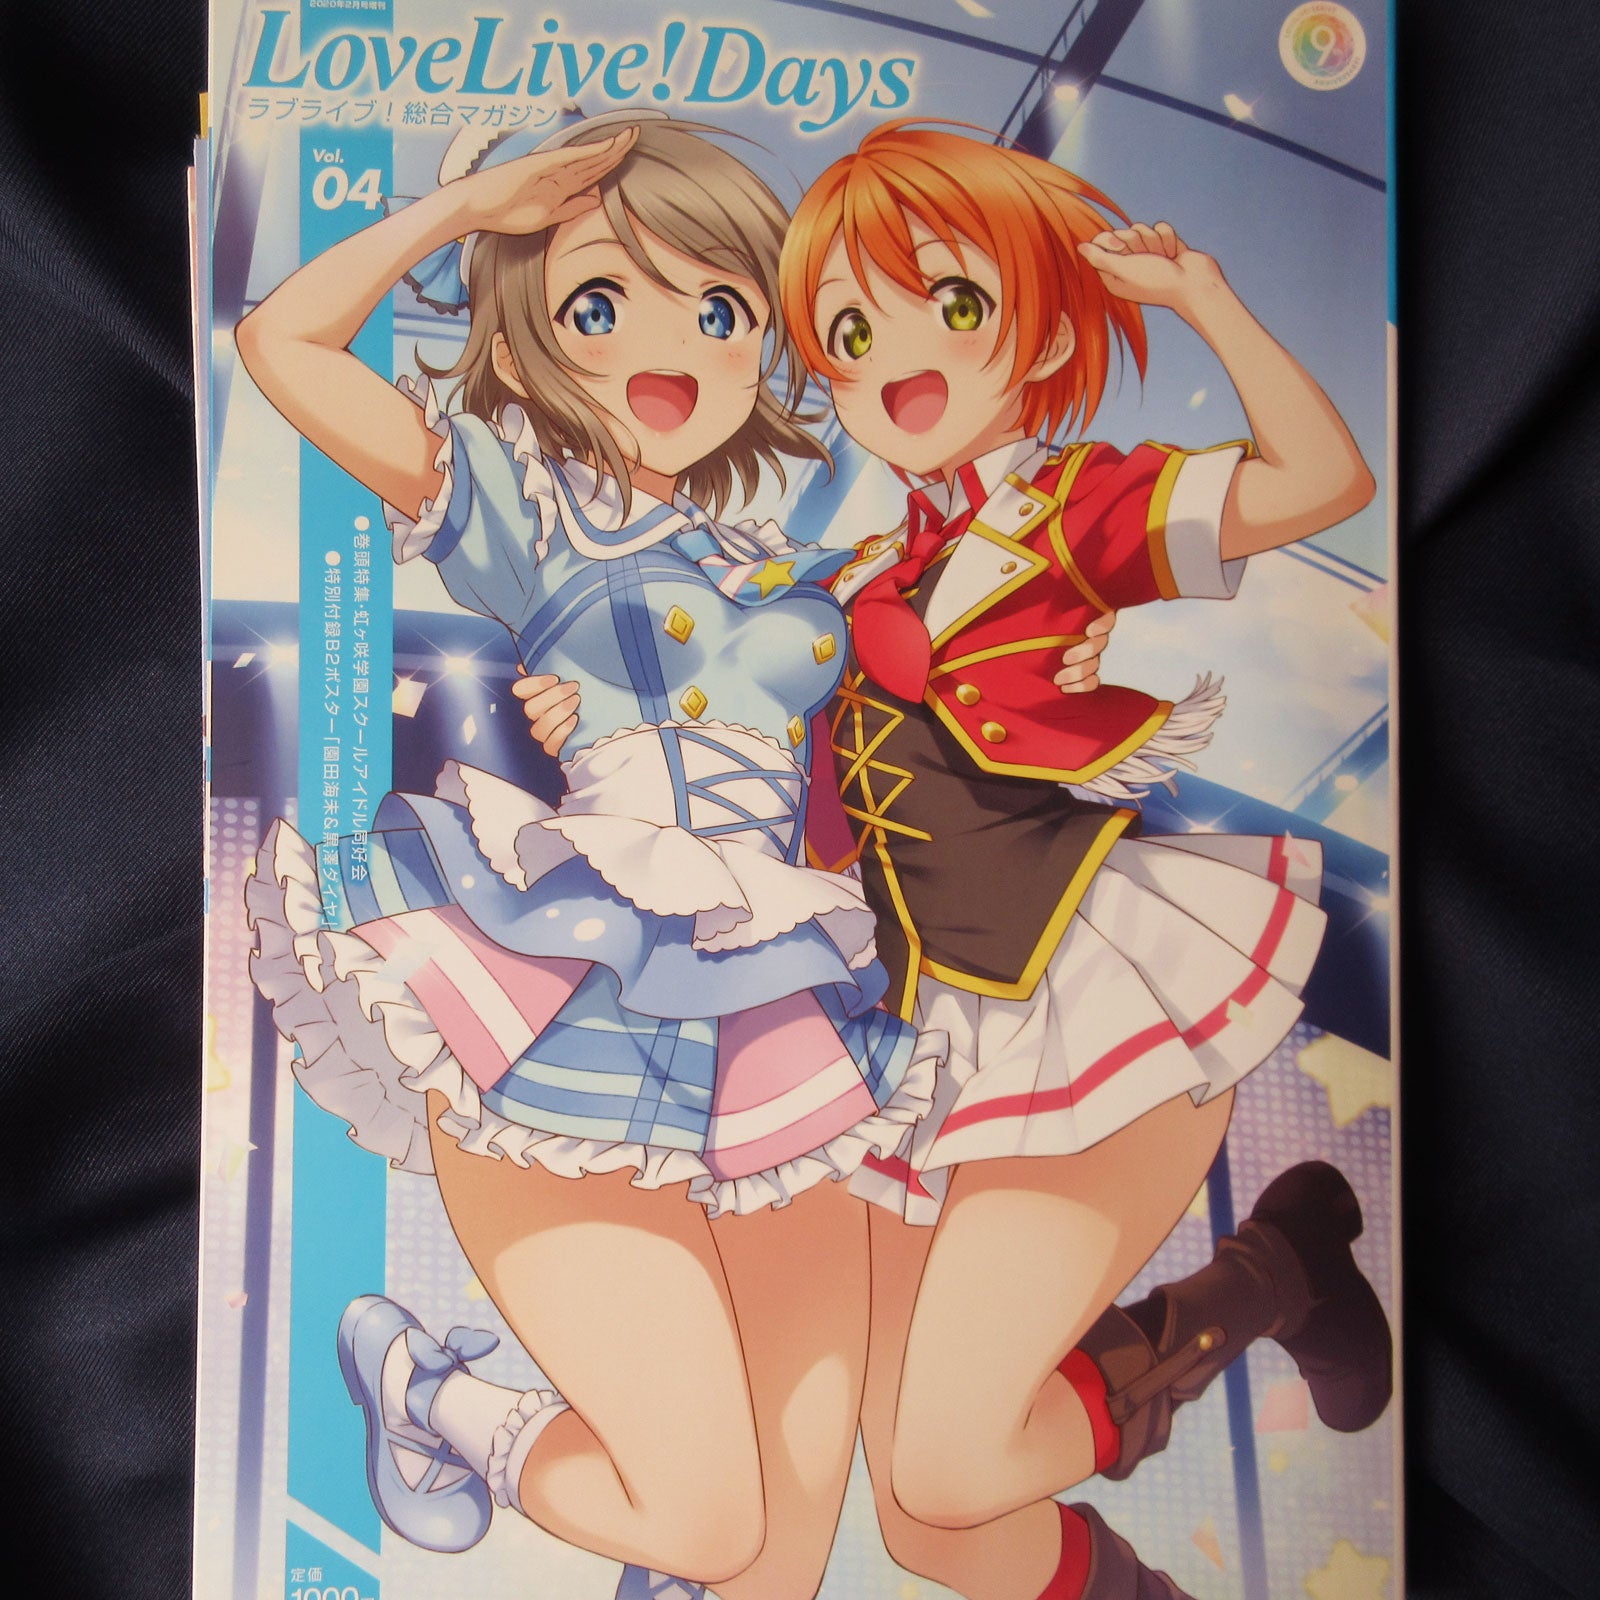 LoveLive!Days Vol.4